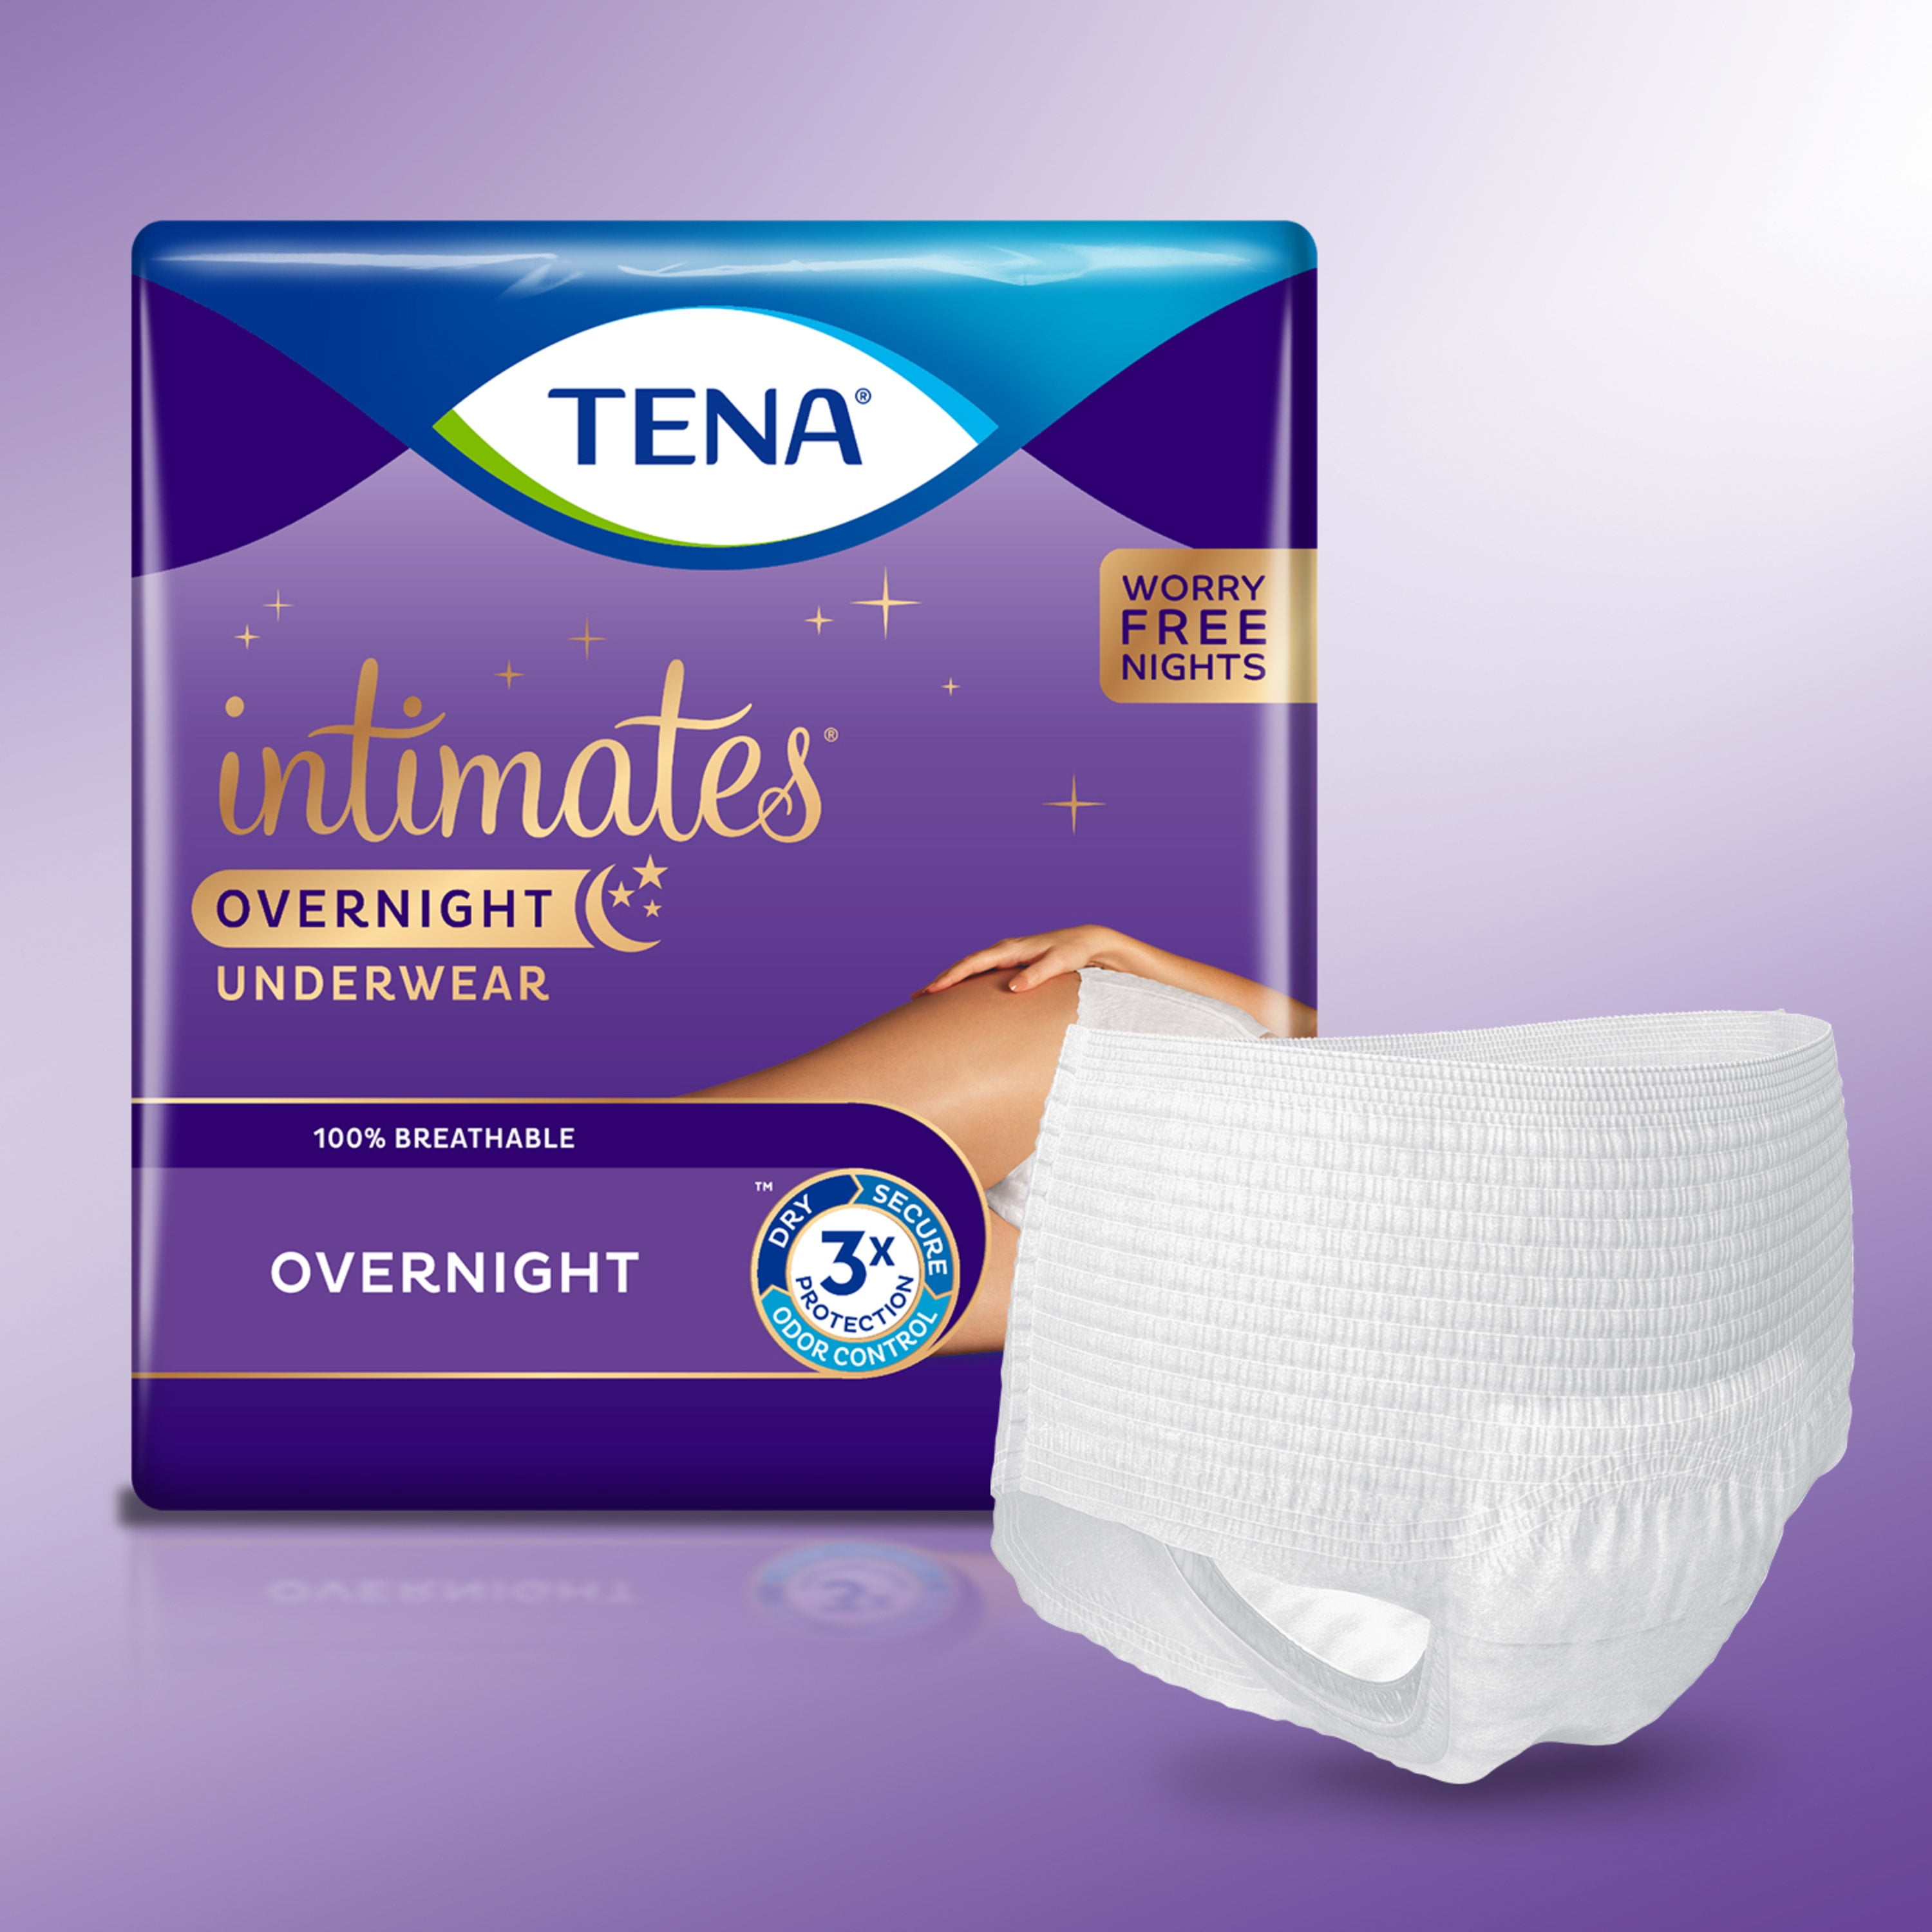 Tena Protective Underwear Ultimate Xl (12 units)